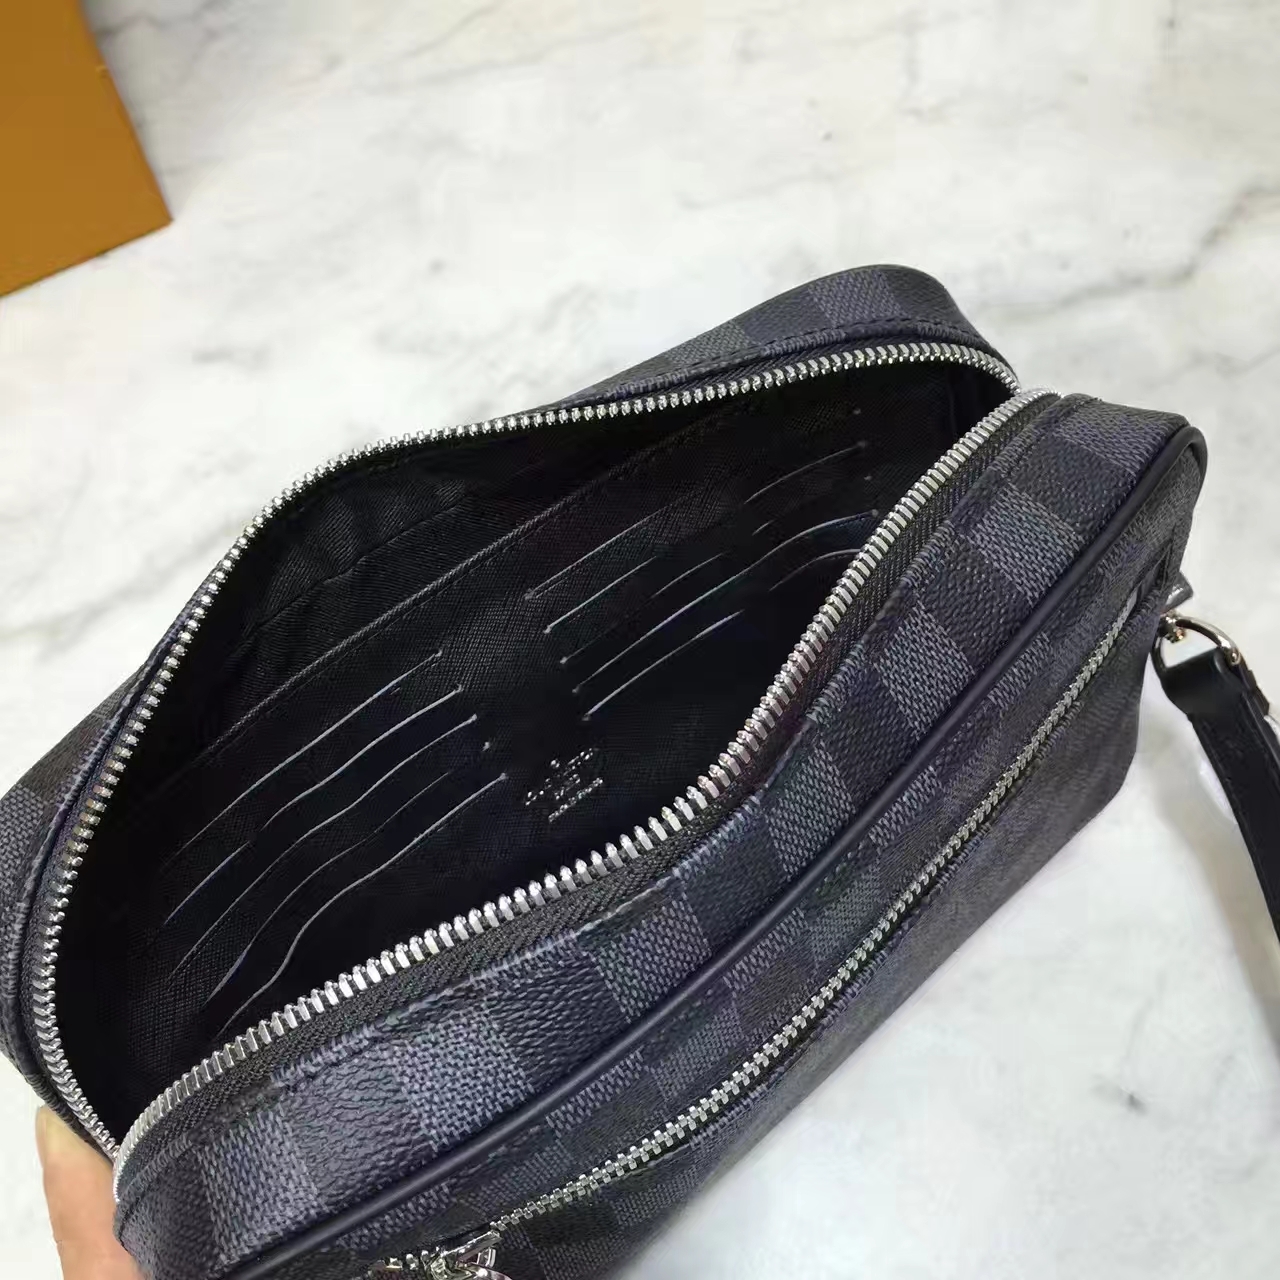 Louis vuitton KASAI clutch purse sale handbag brands louis vuitton man bag lv clutch small bag ...